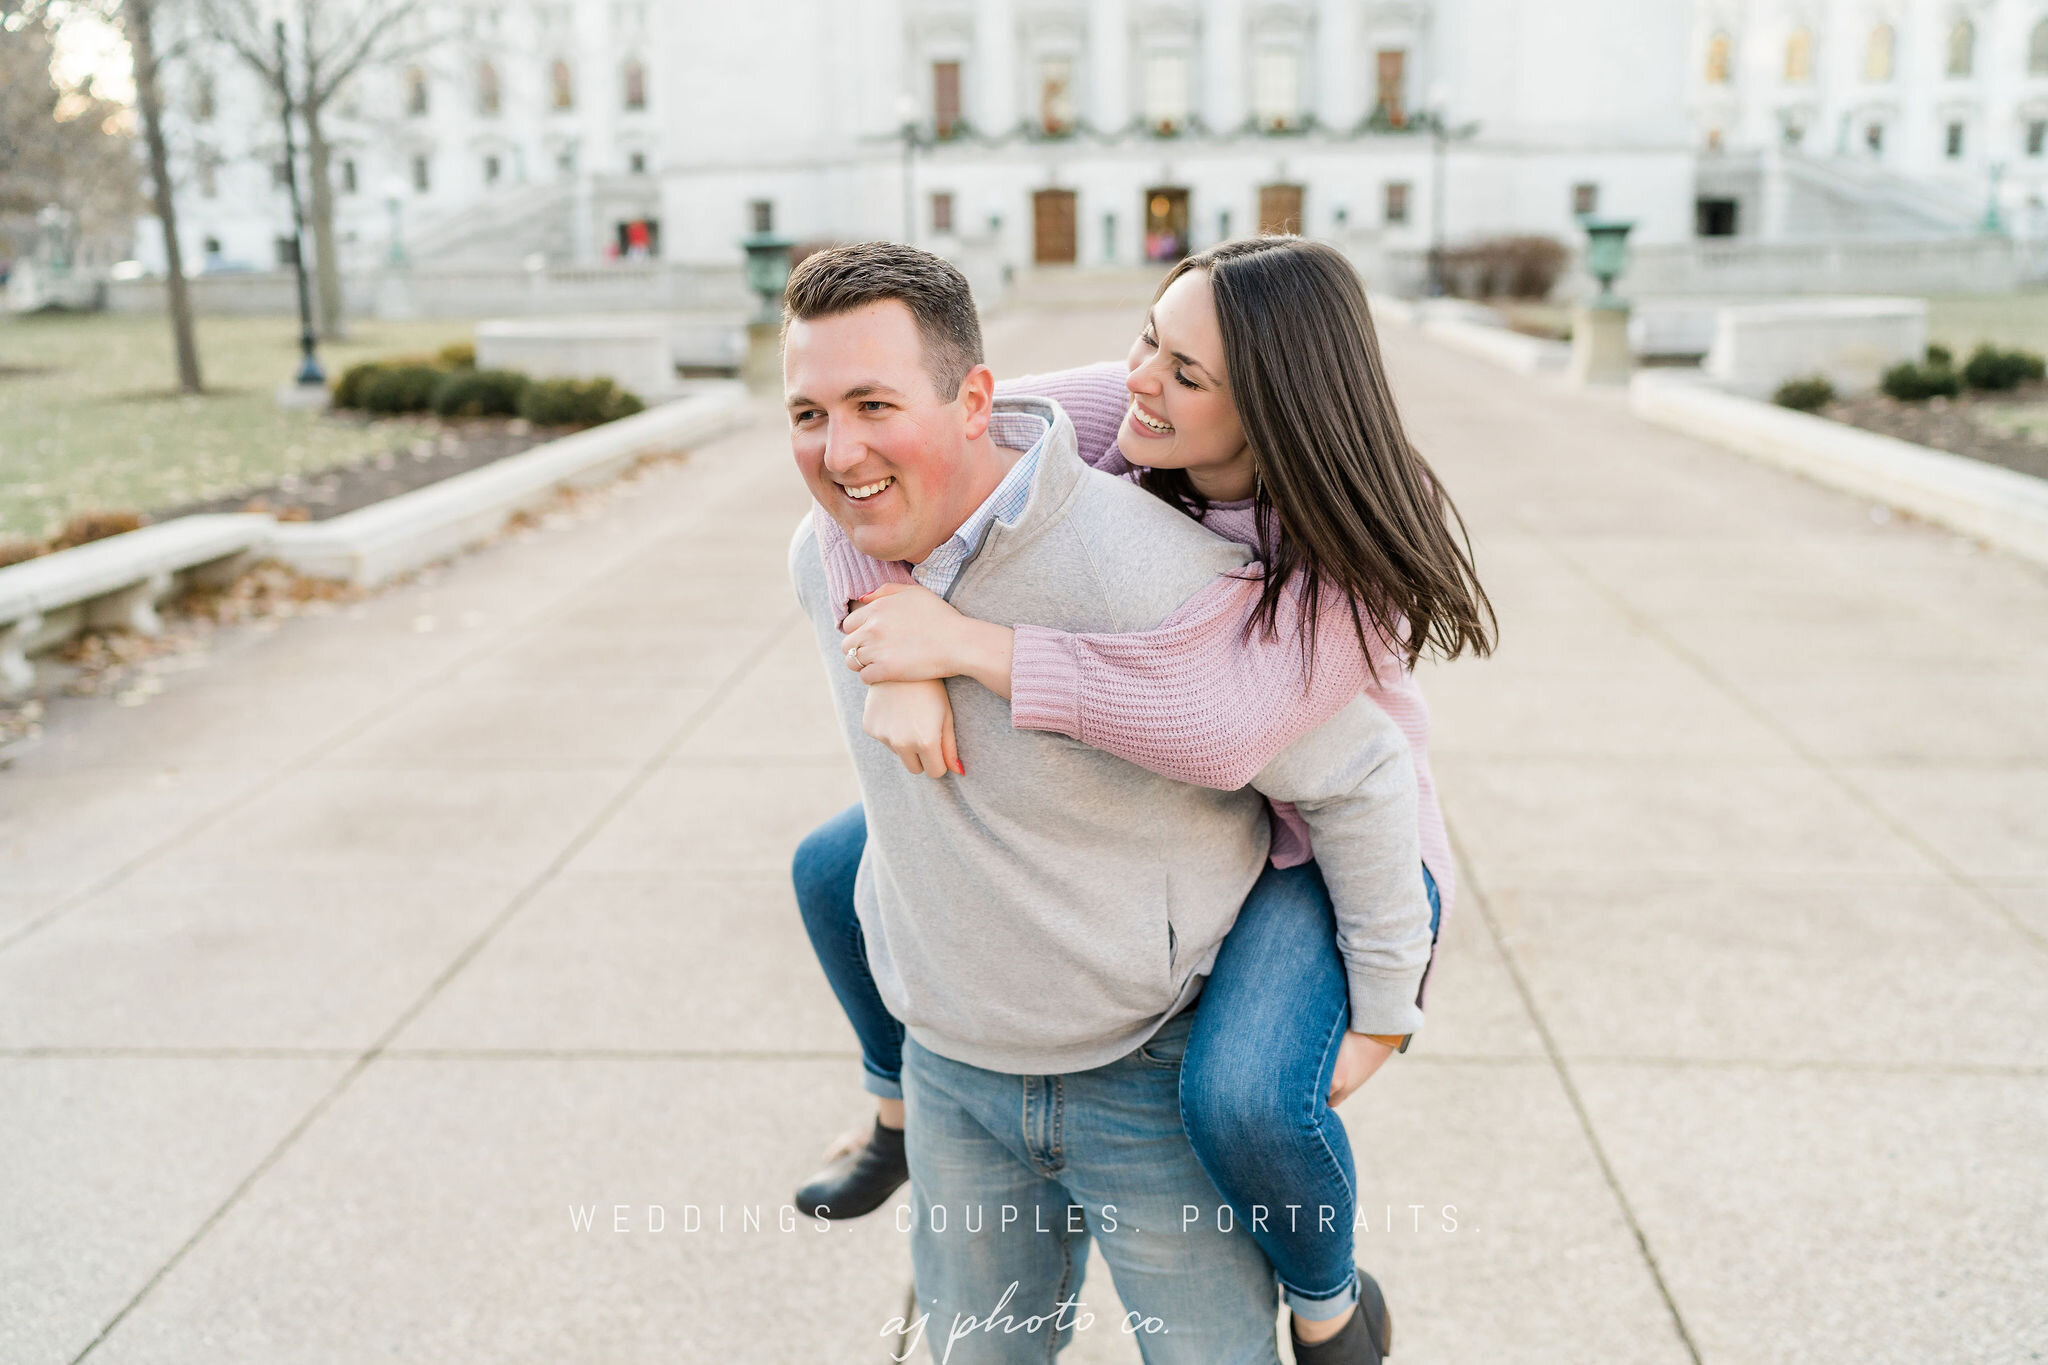 Man giving his fiancé a piggyback ride